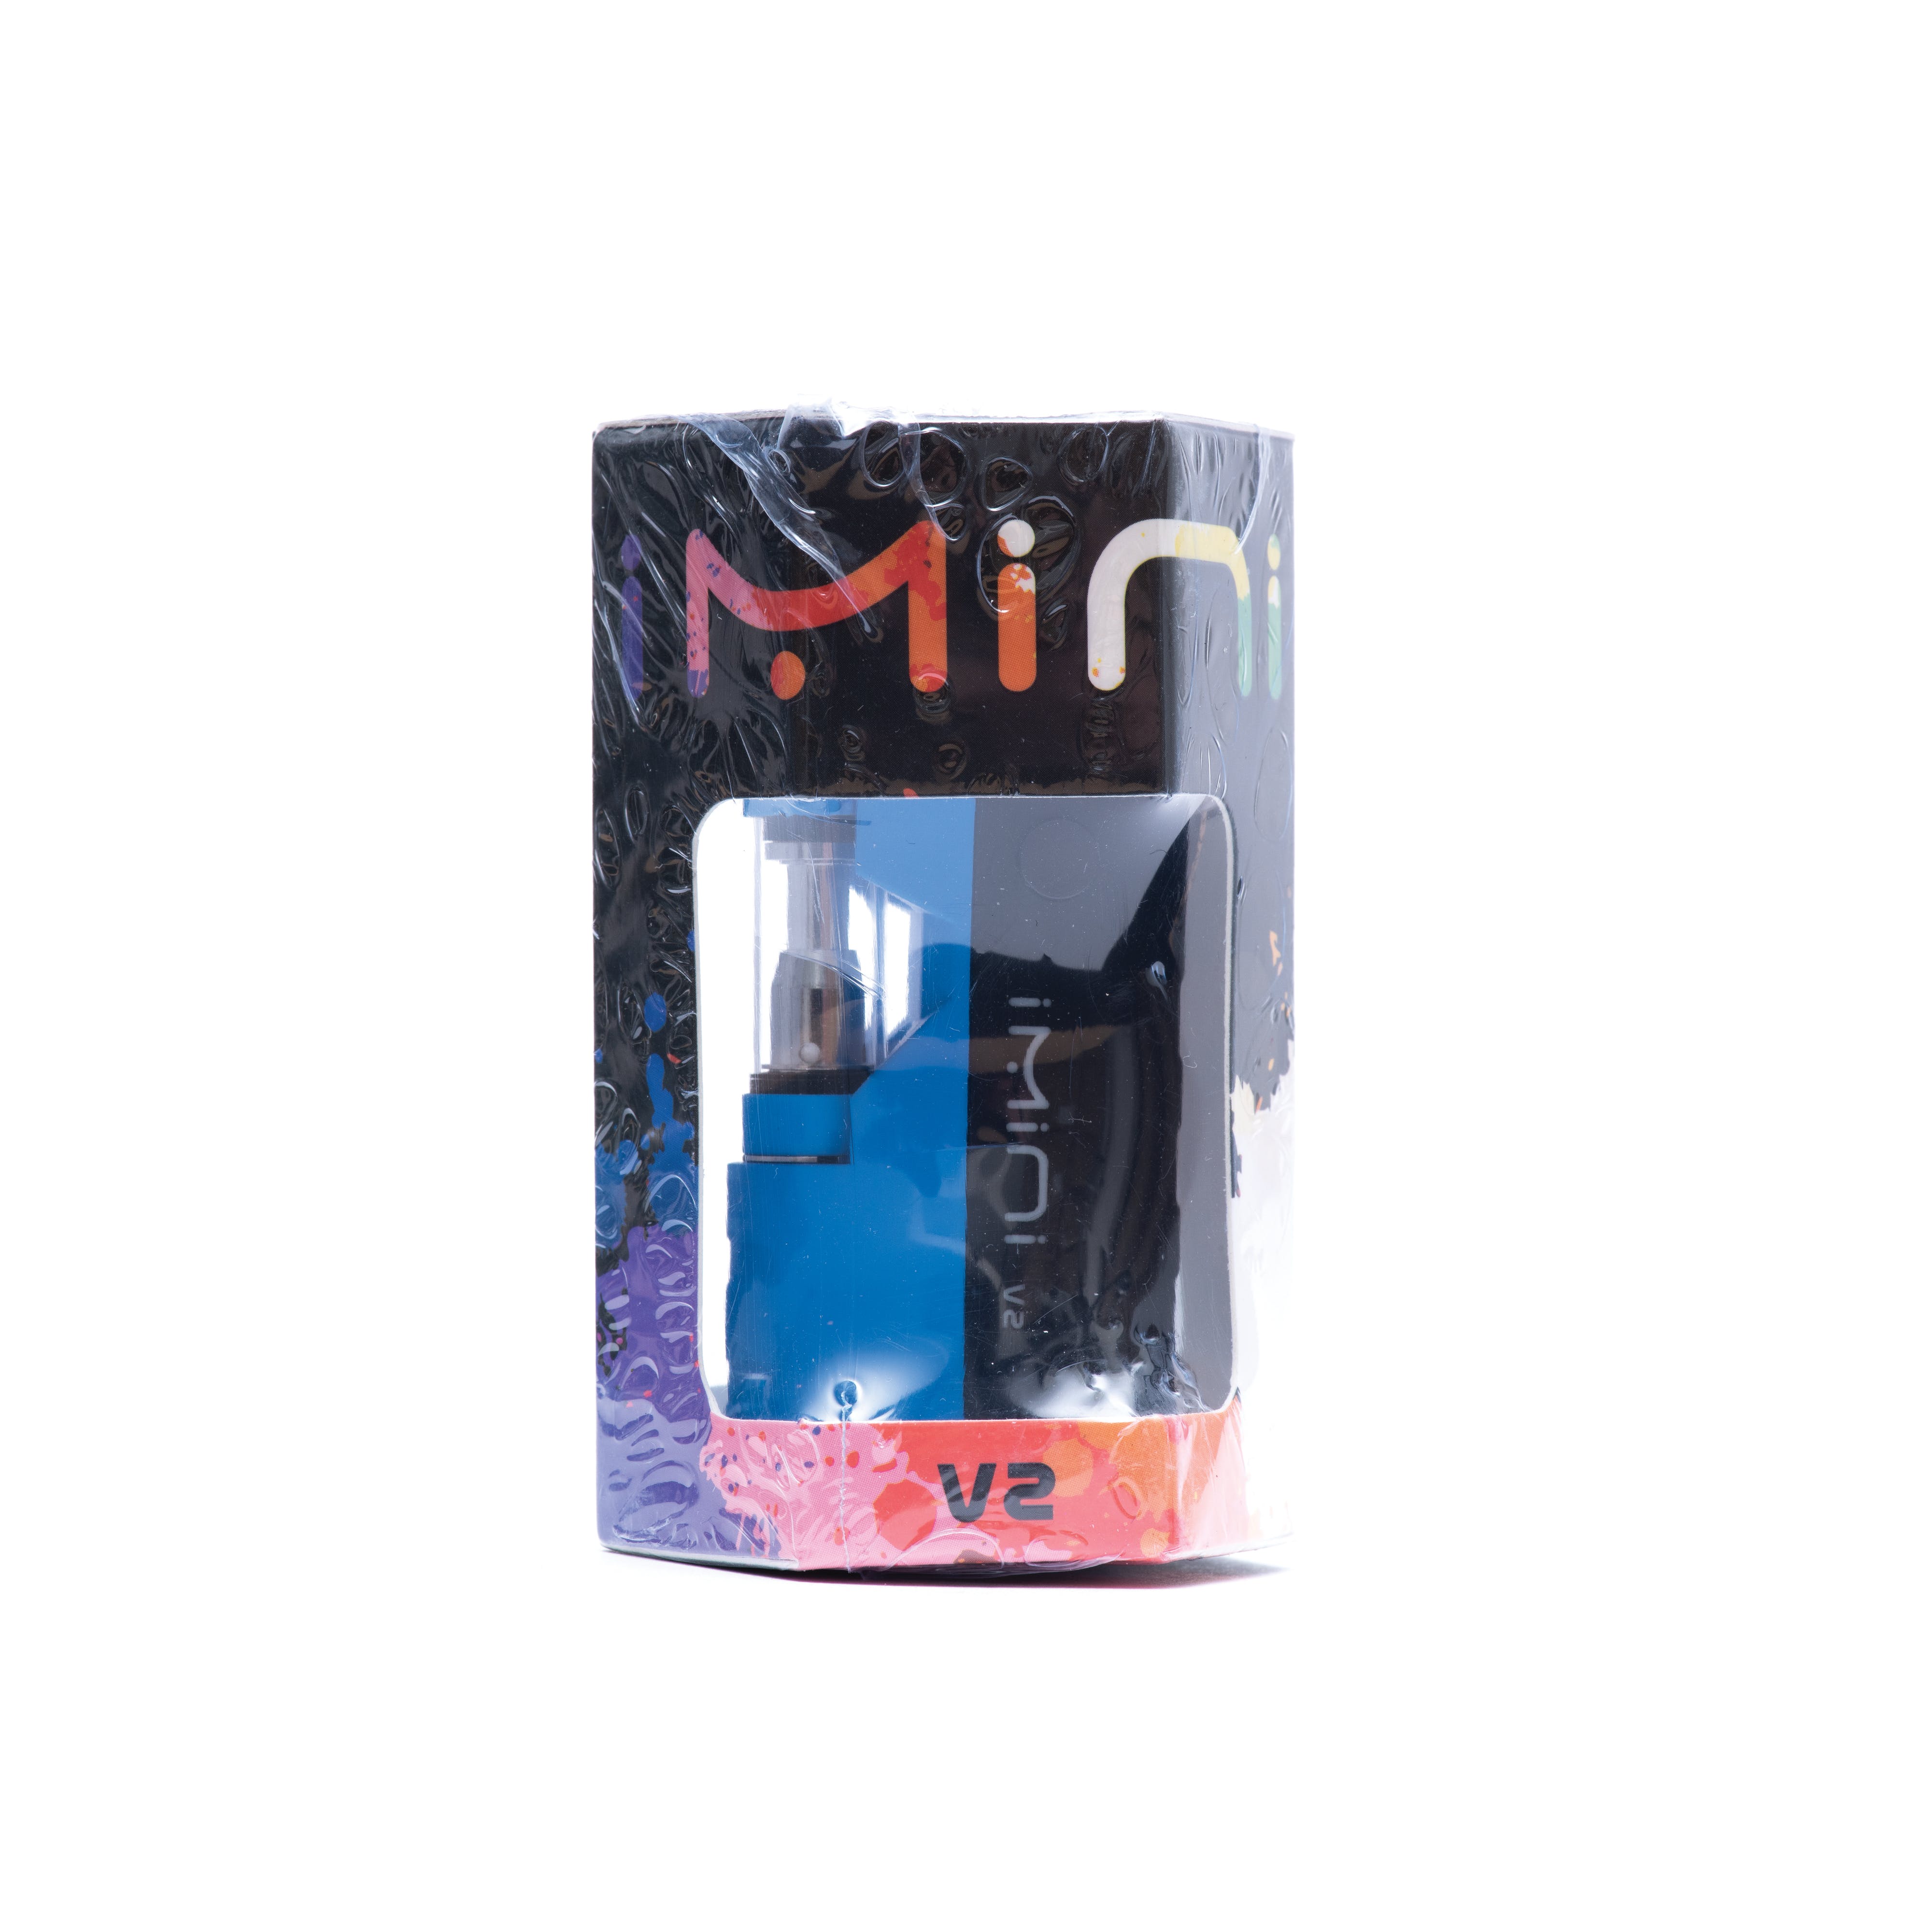 iMini Cartridge Battery